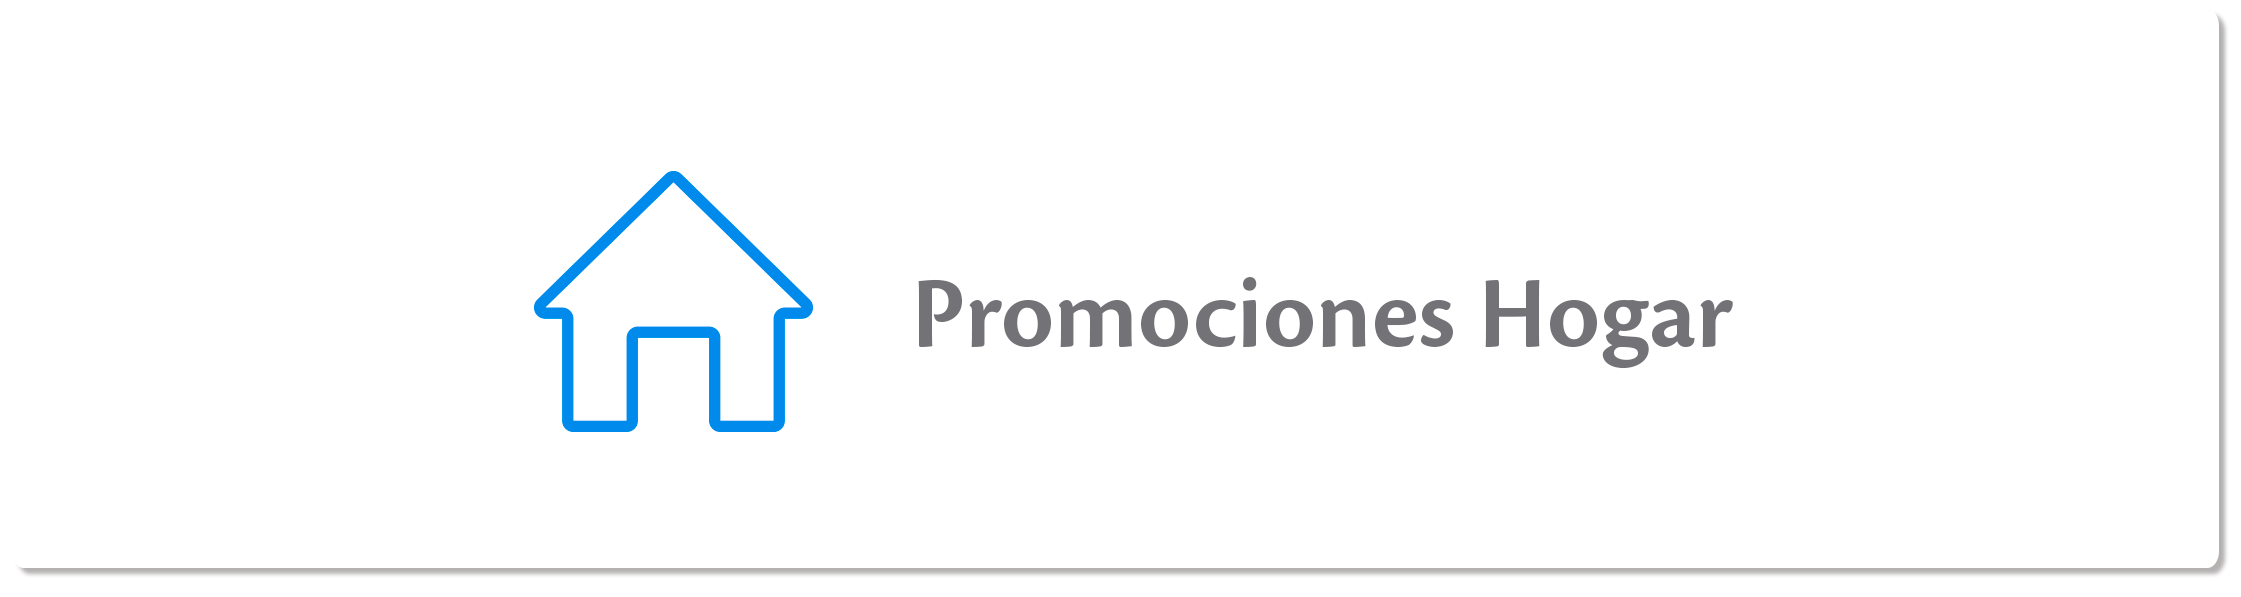 aw-promociones_hogar.png